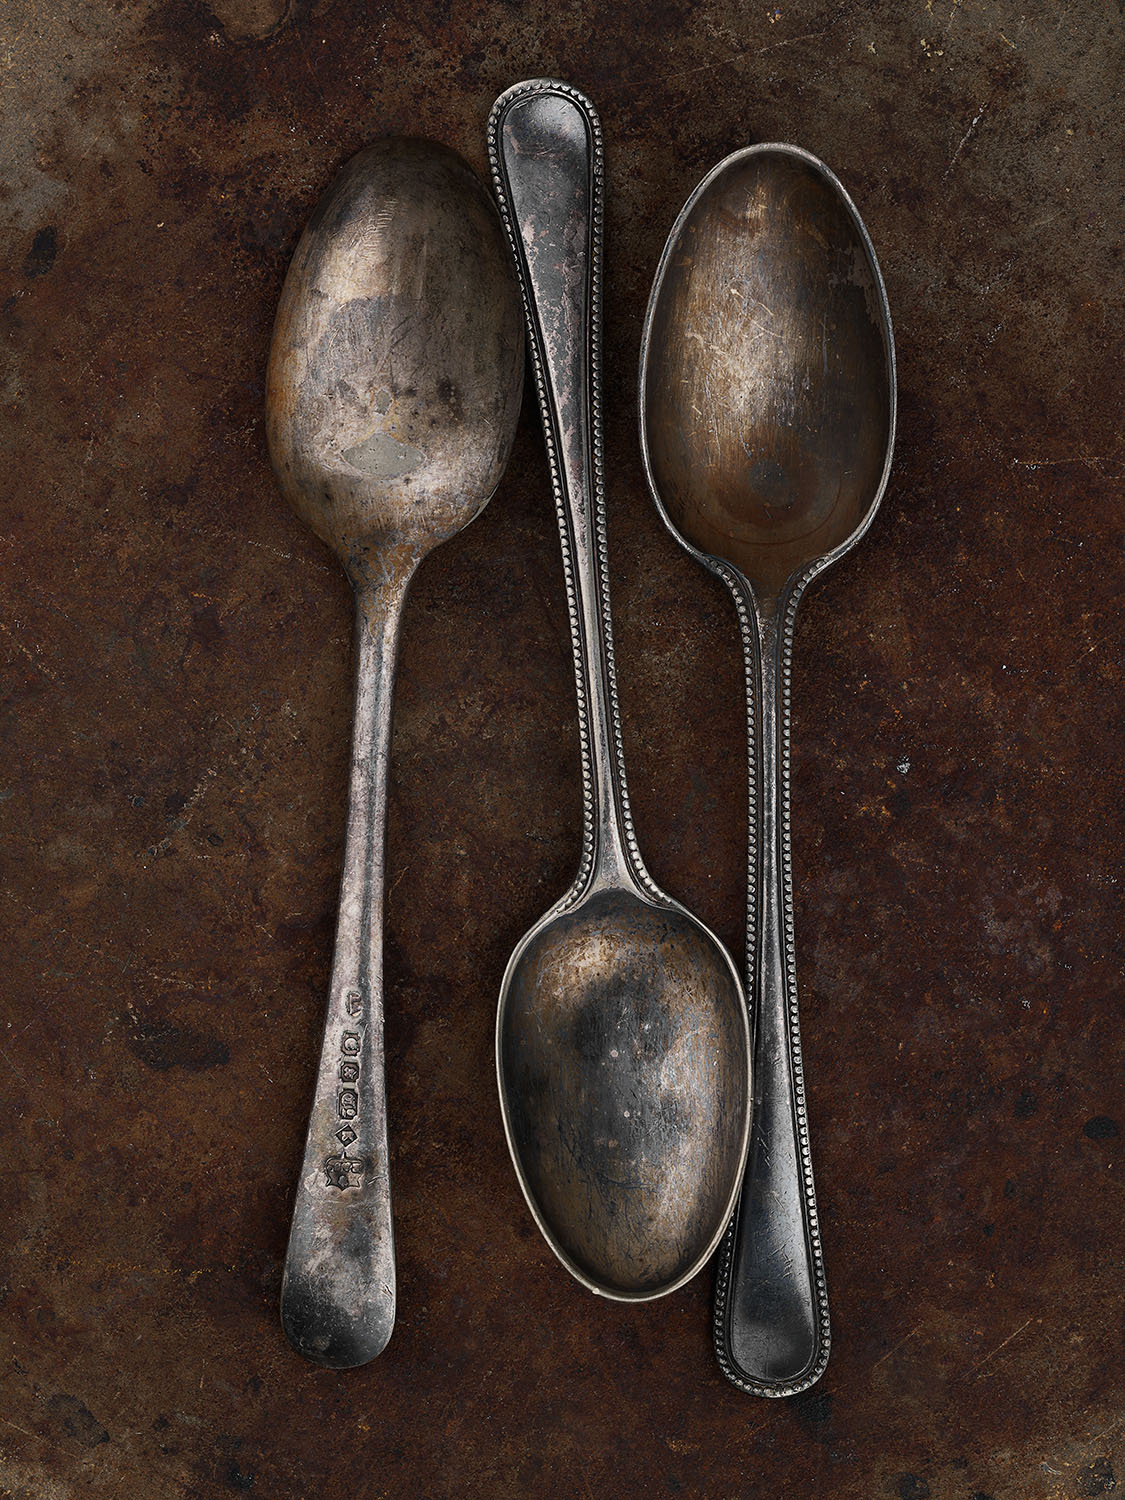 #19 Three Spoons